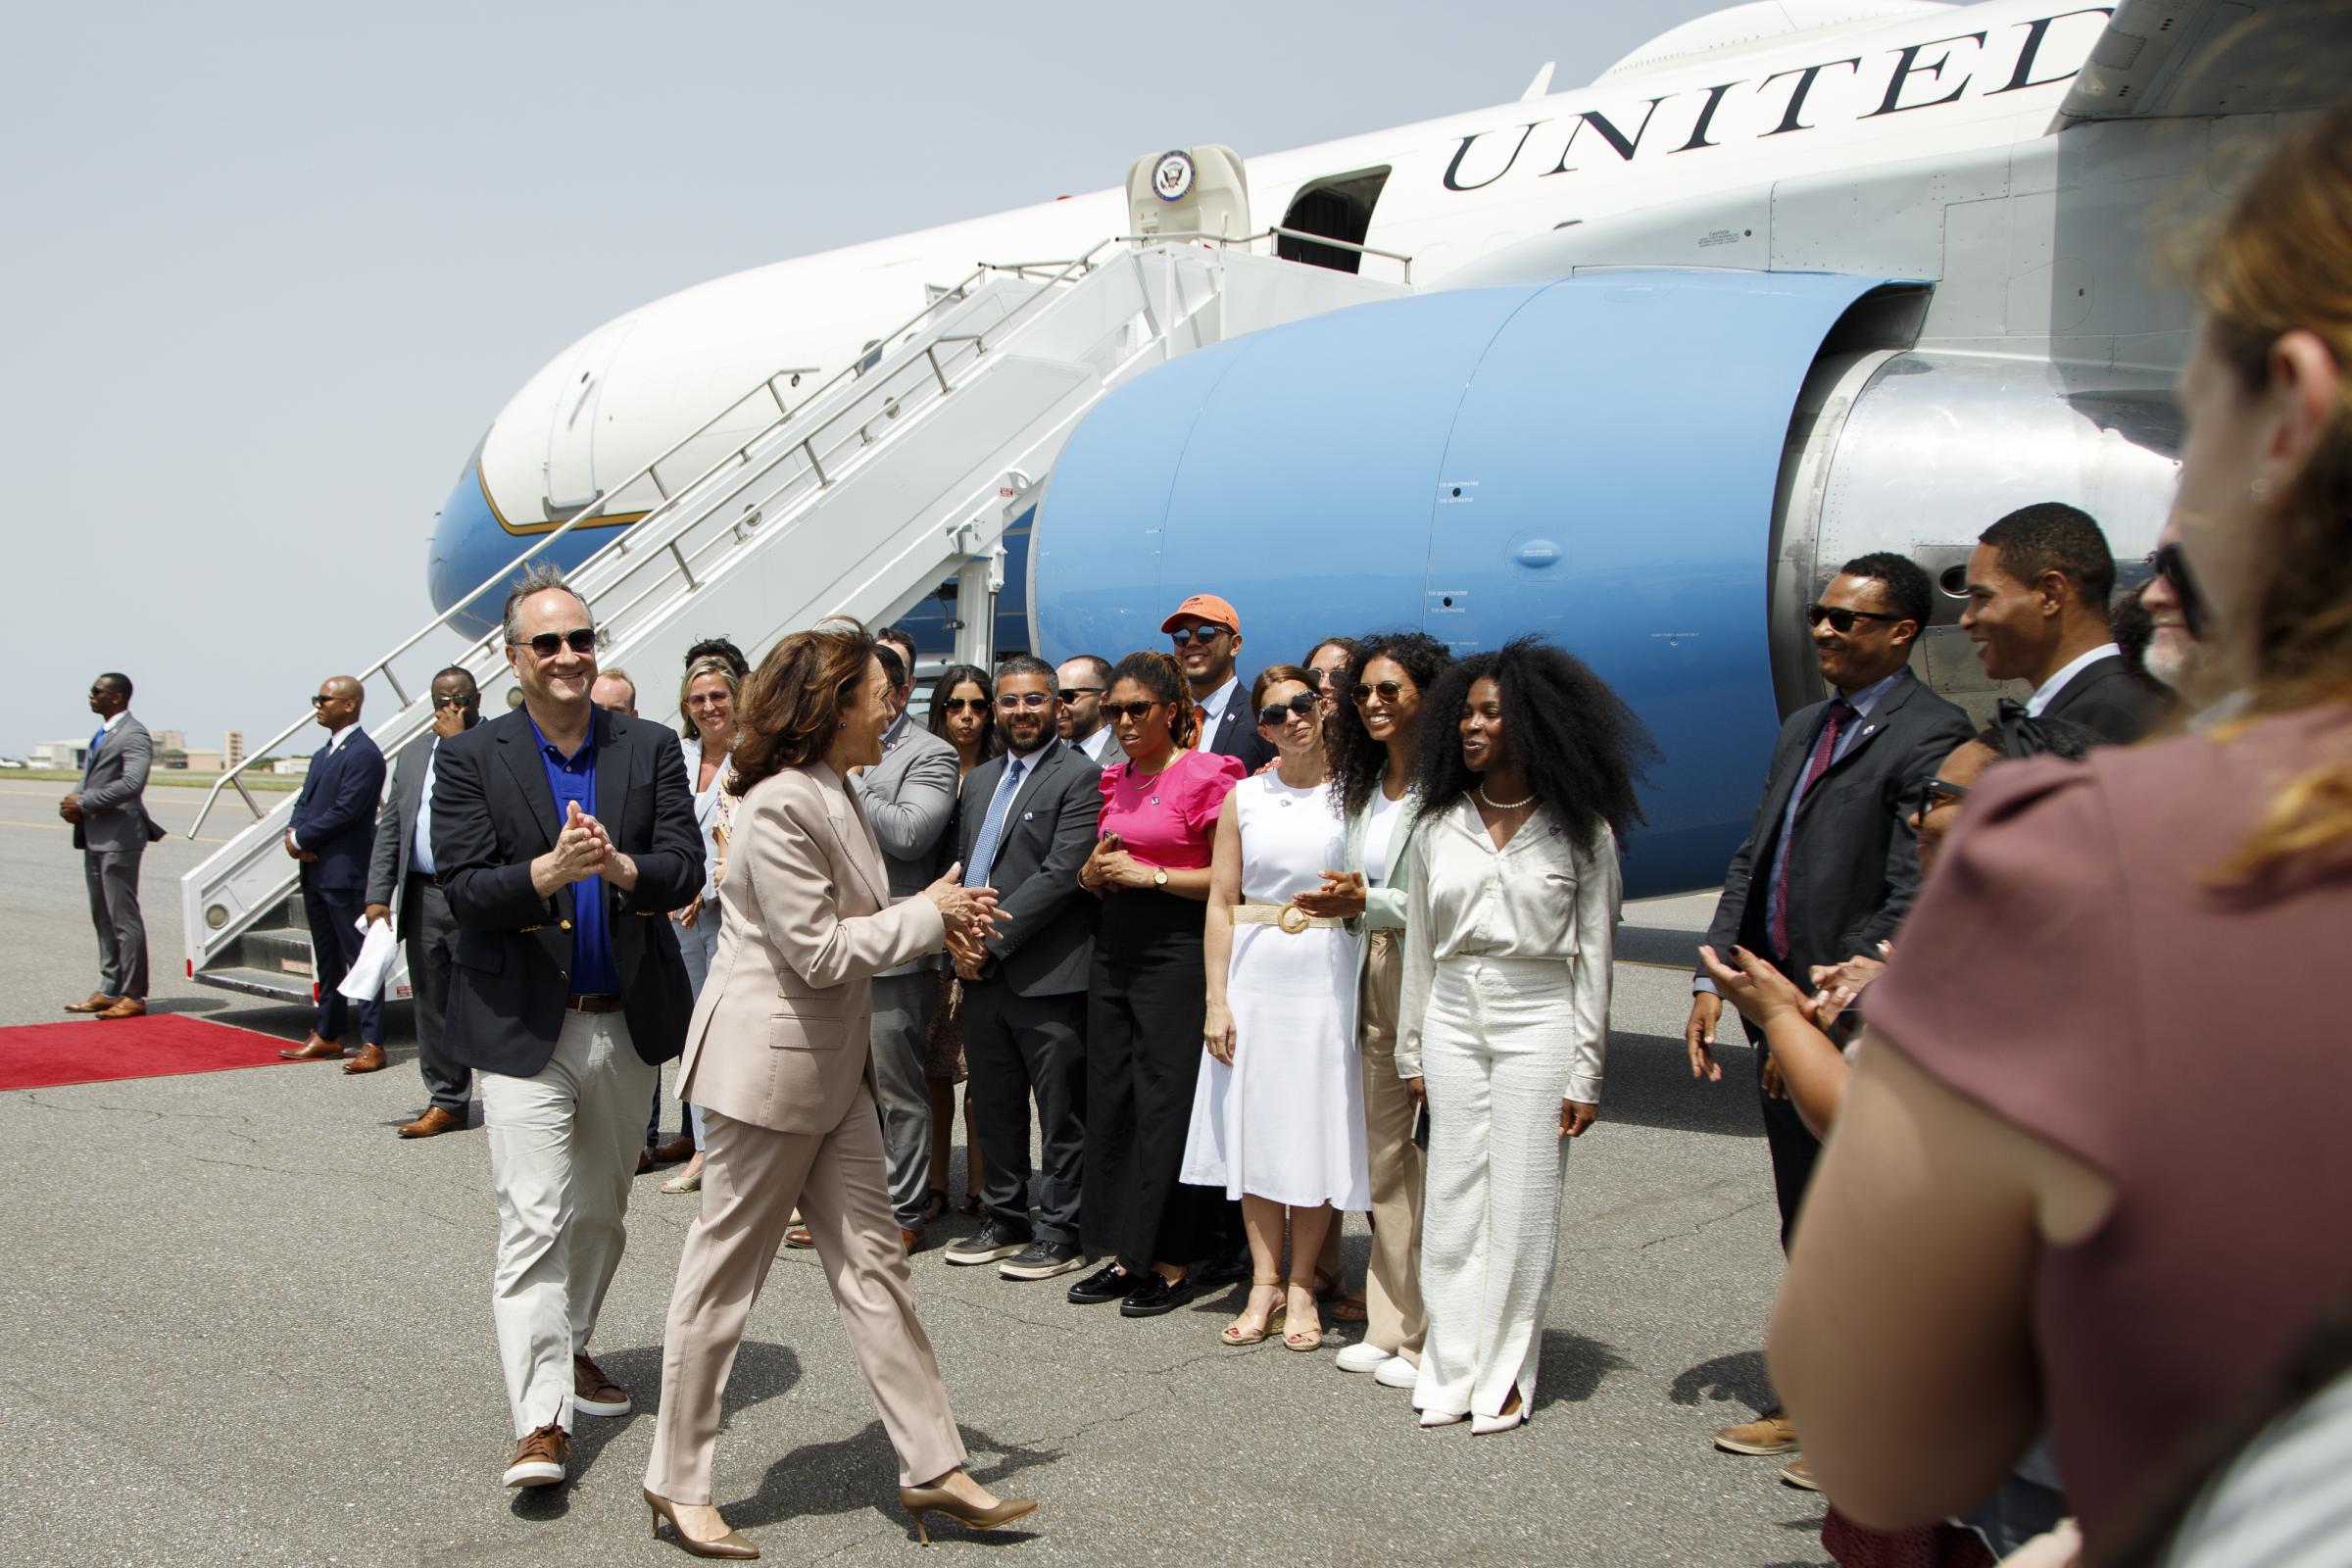 U.S. Vice President Kamala Harris Visit To Ghana